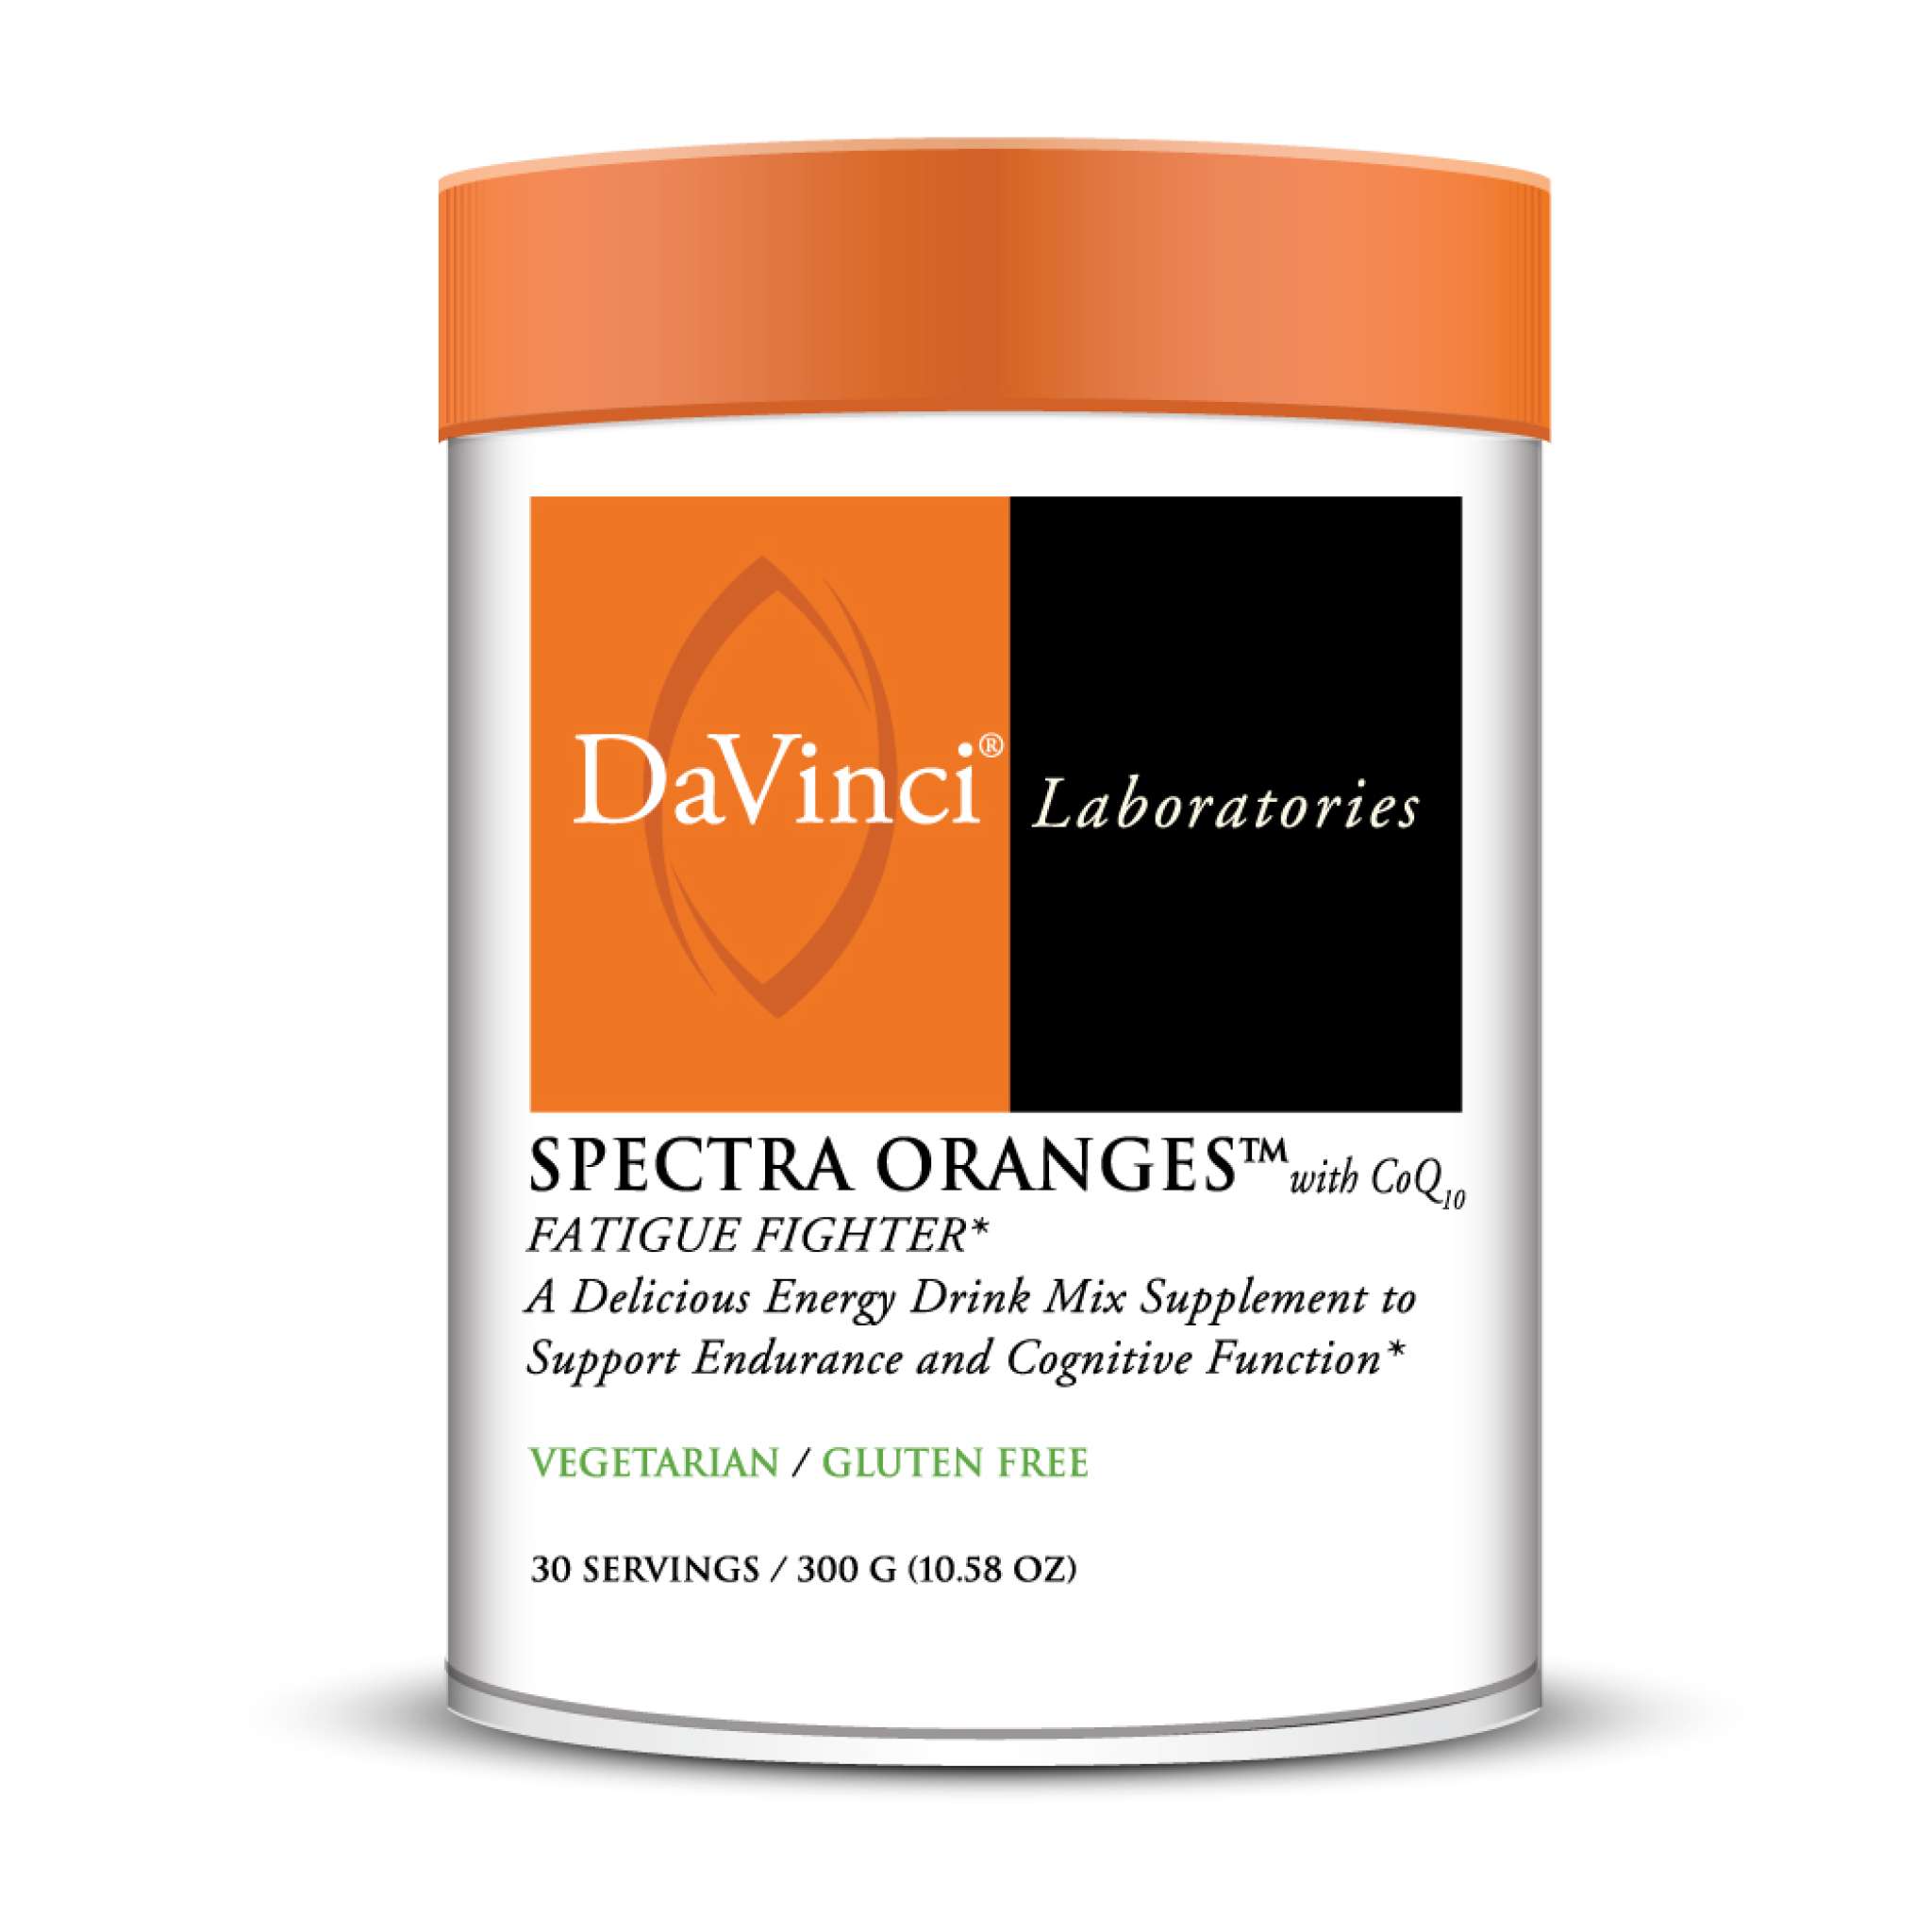 Davinci Laboratories - Spectra Oranges